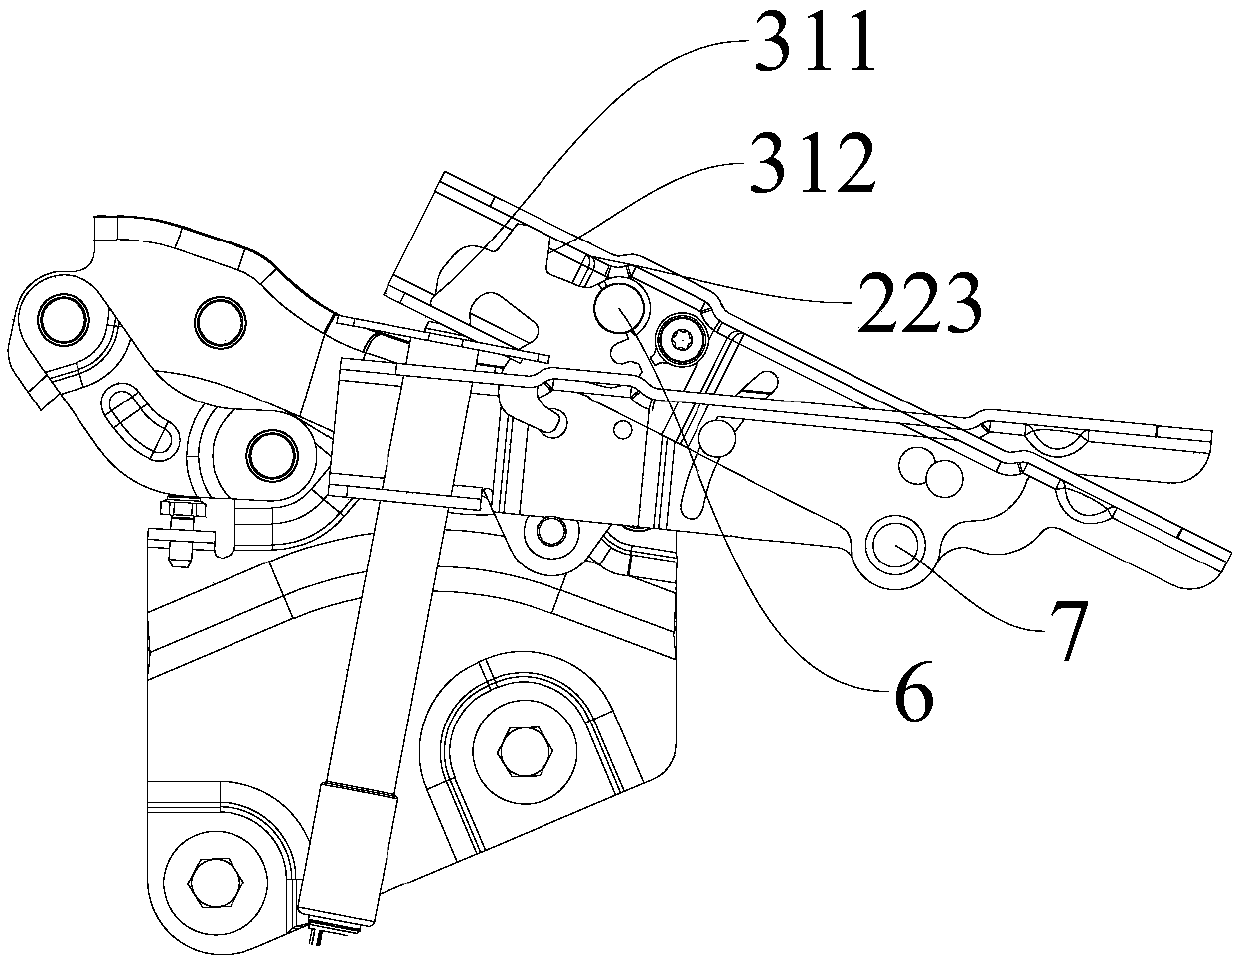 Engine hood hinge device for vehicle, and vehicle with engine hood hinge device